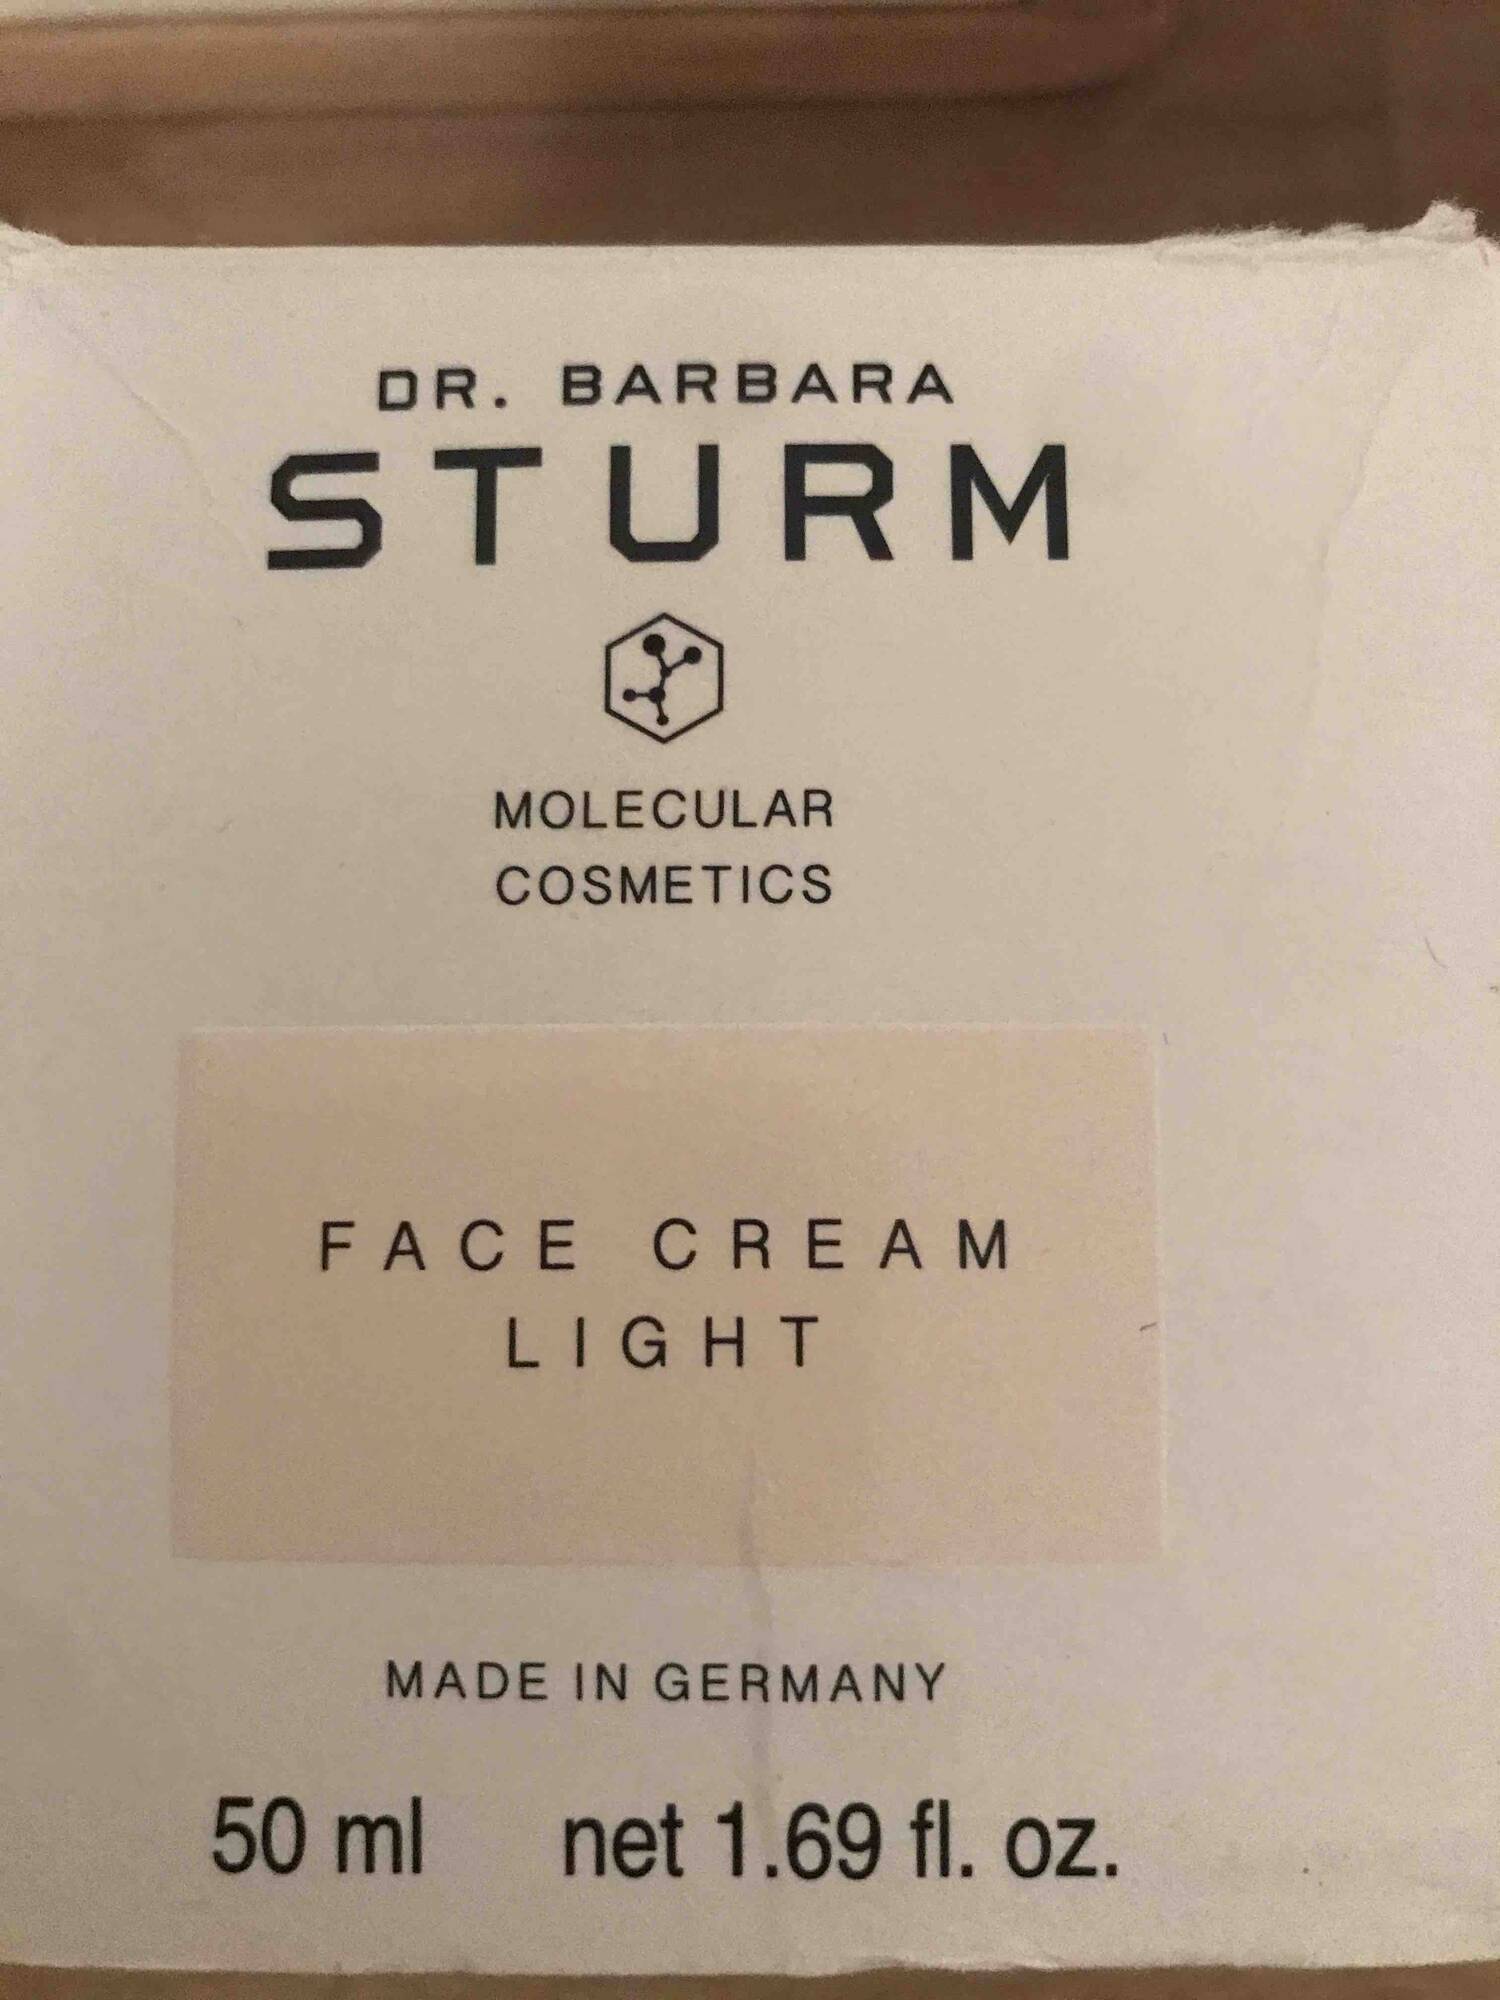 DR BARBARA STURM - Face cream light 